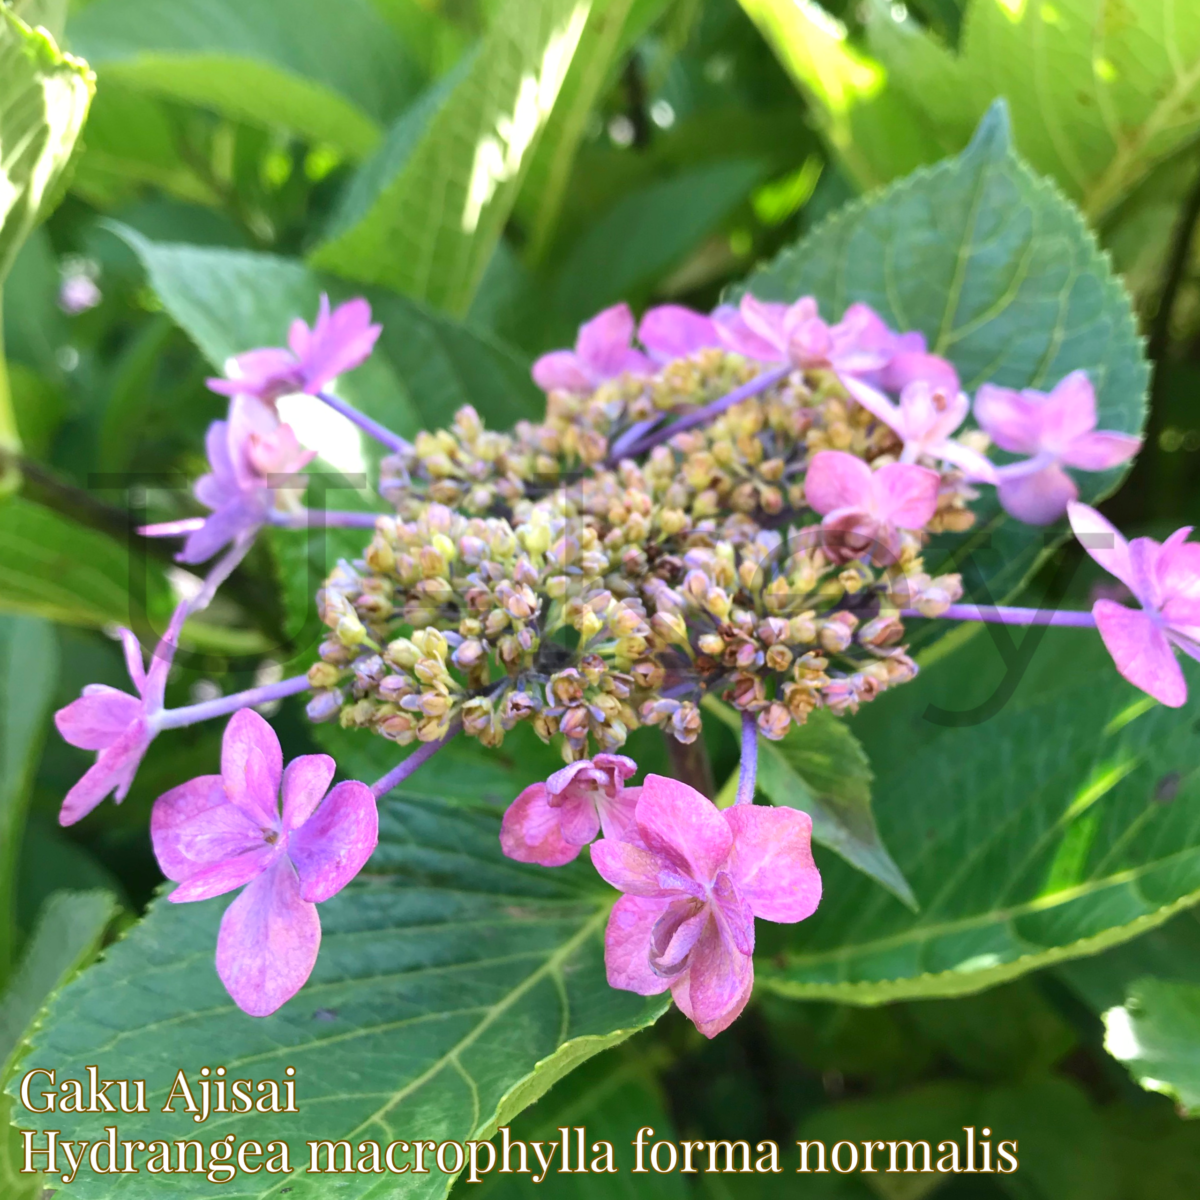 Gaku-Ajisai,Hydrangea macrophylla forma normalis